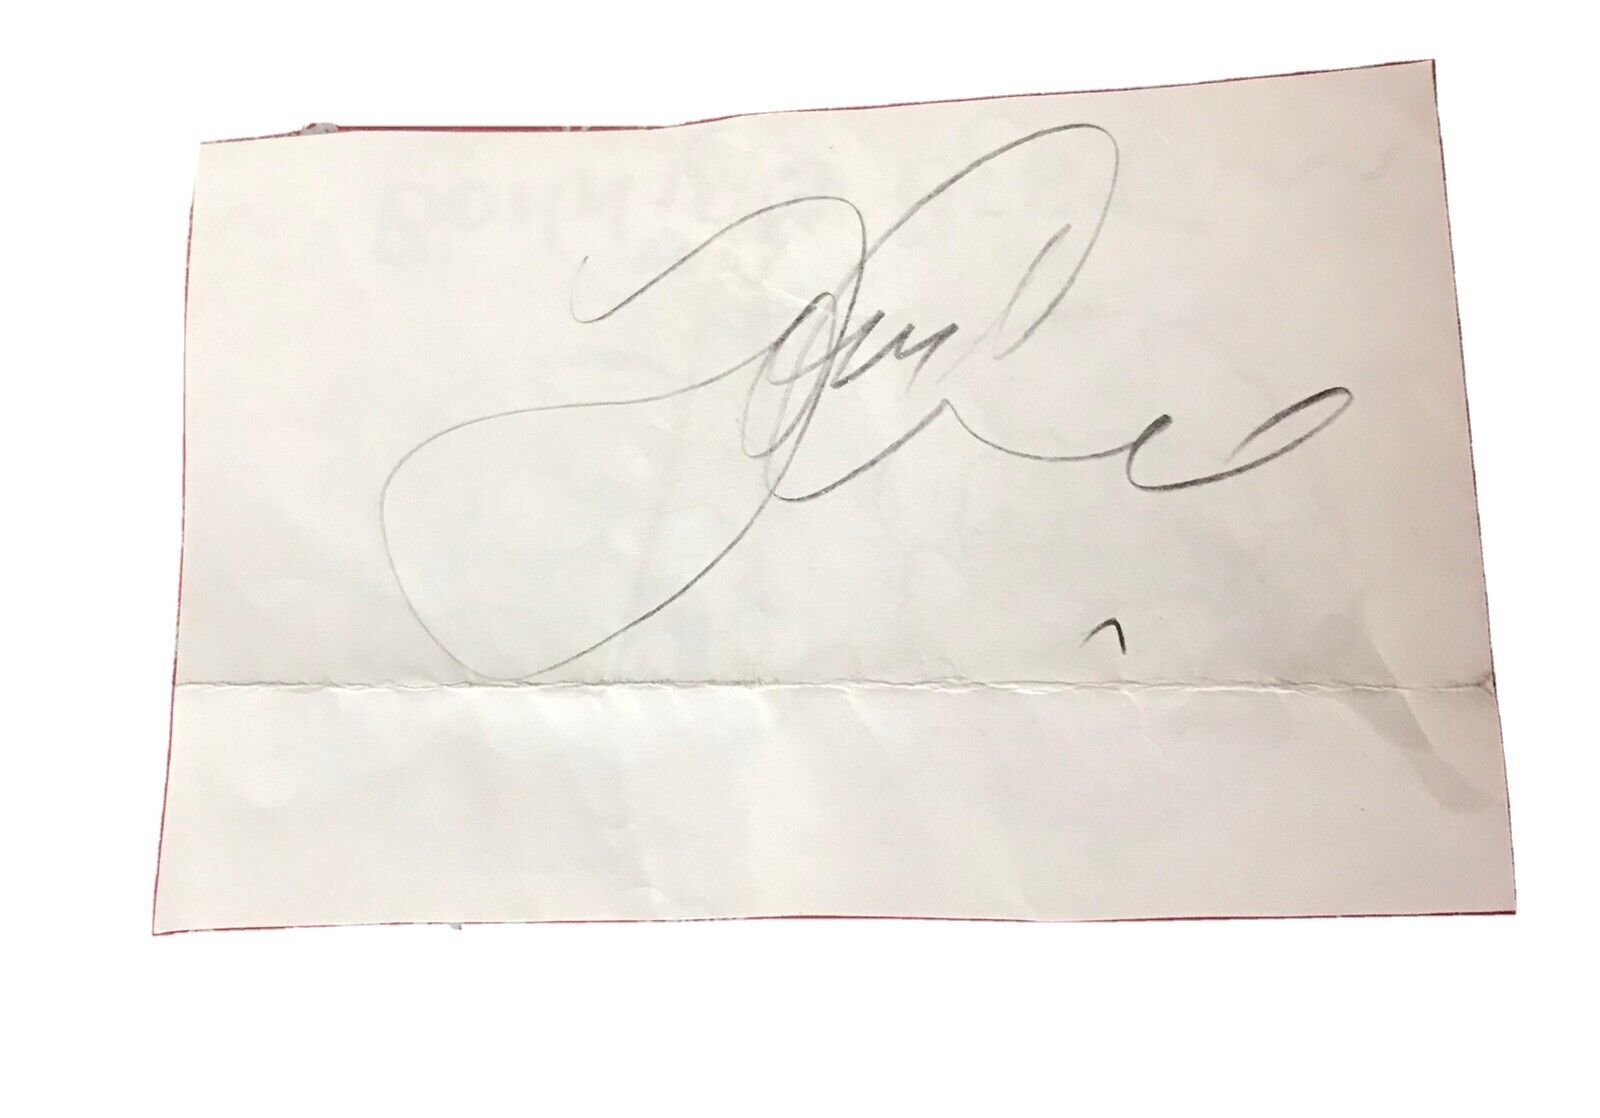 Tom Cruise,  Top Gun autograph